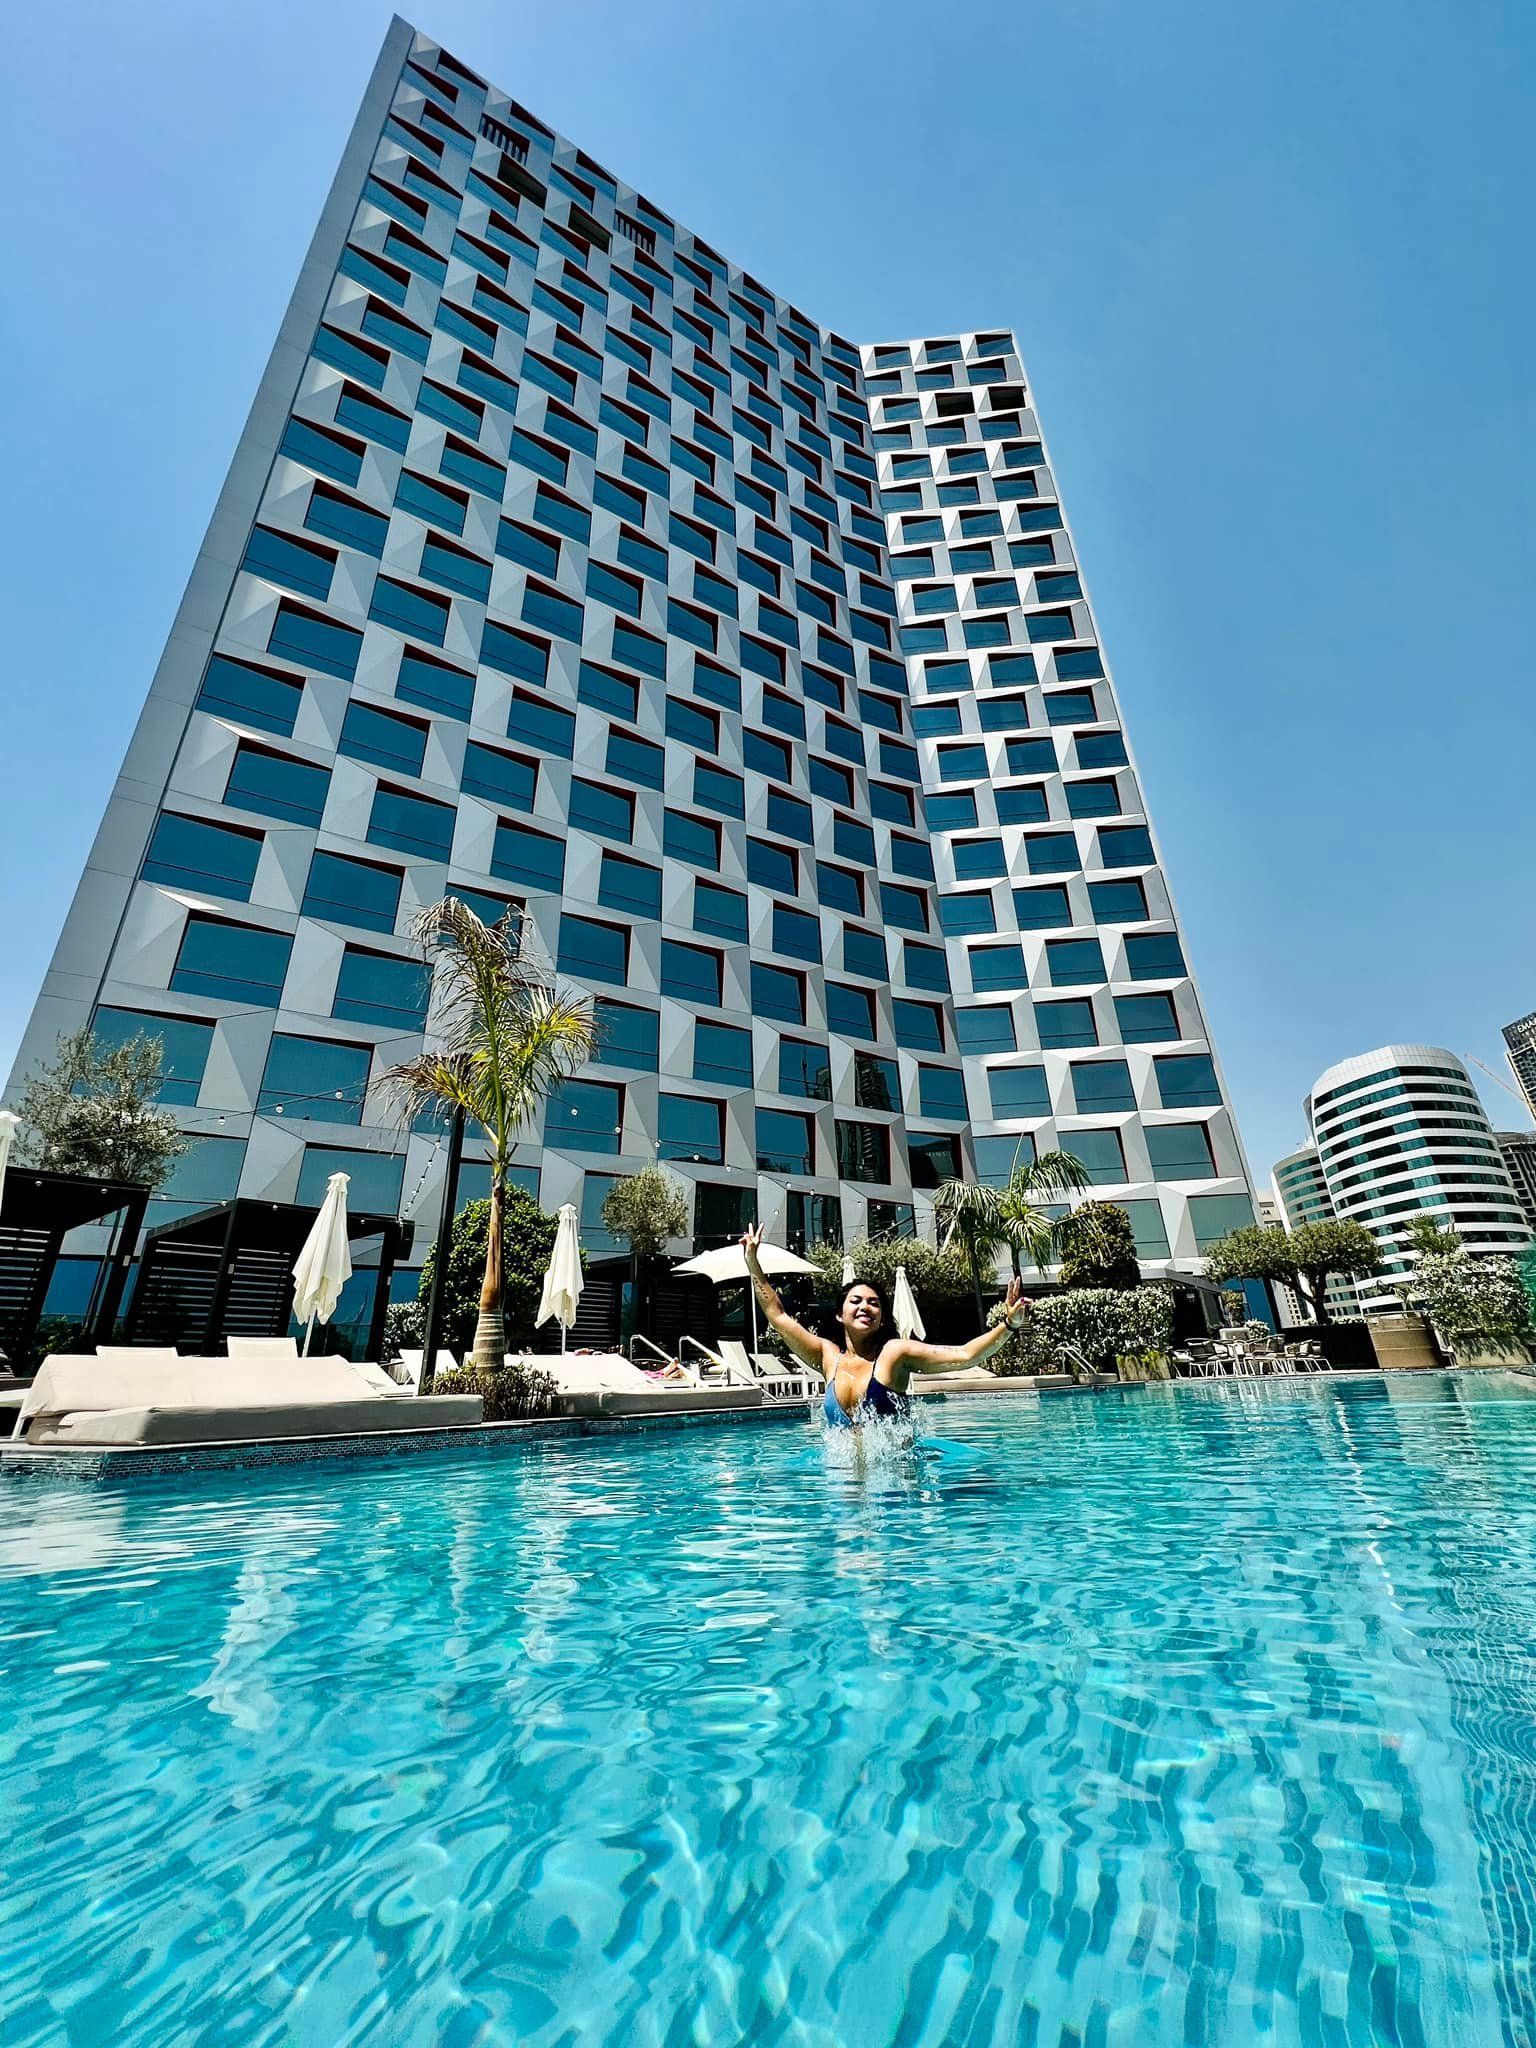 Hotel Indigo Dubai Downtown The first 5-star boutique hotel in Dubai